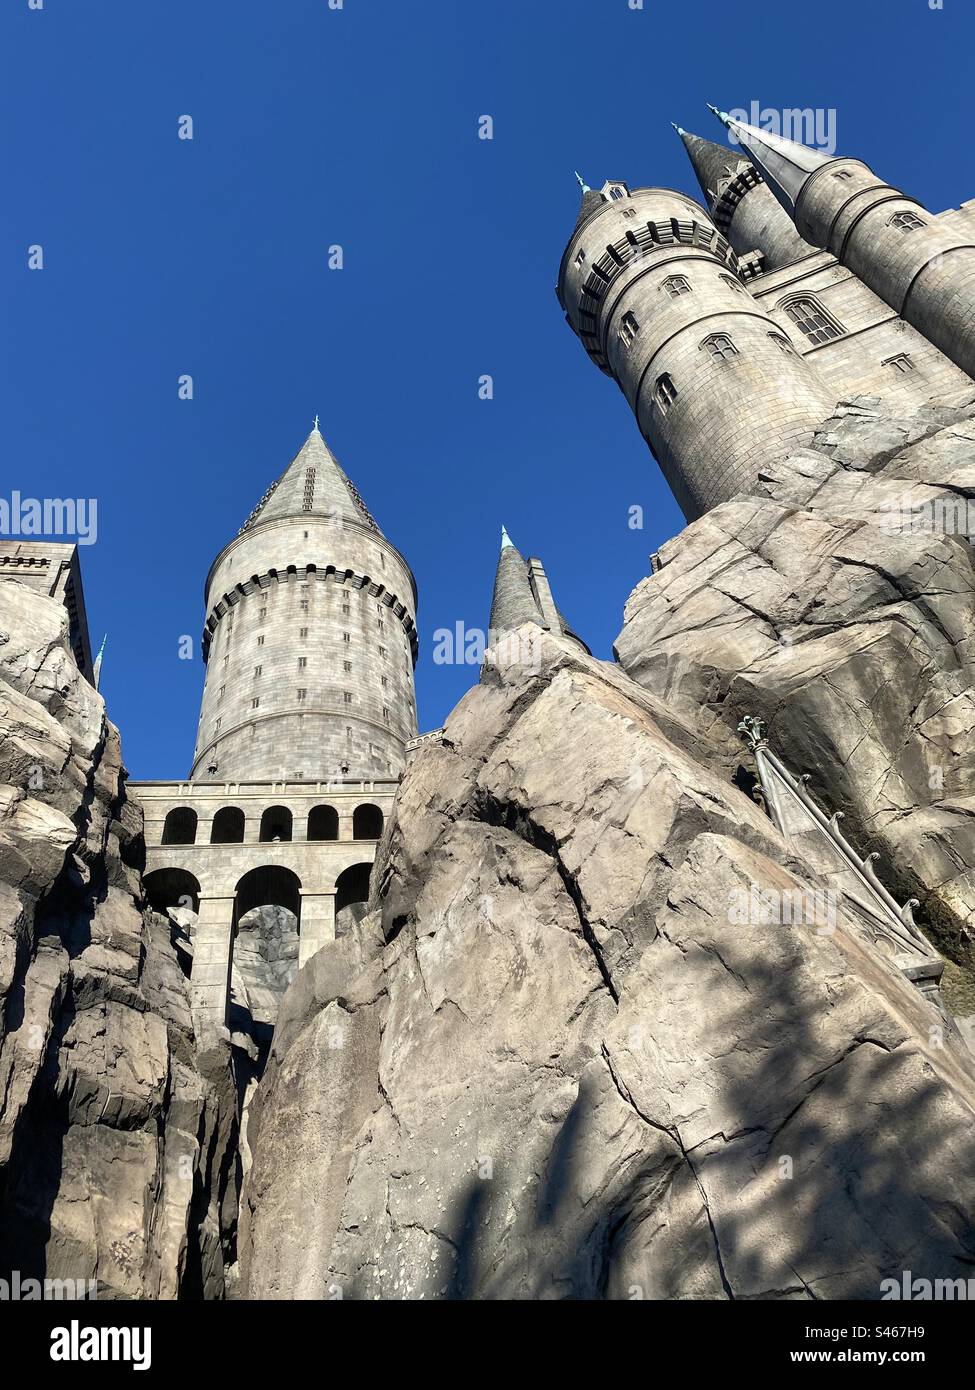 The Wizarding World of Harry Potter - Hogwarts. Situato presso gli Universal Studios Hollywood. Foto Stock